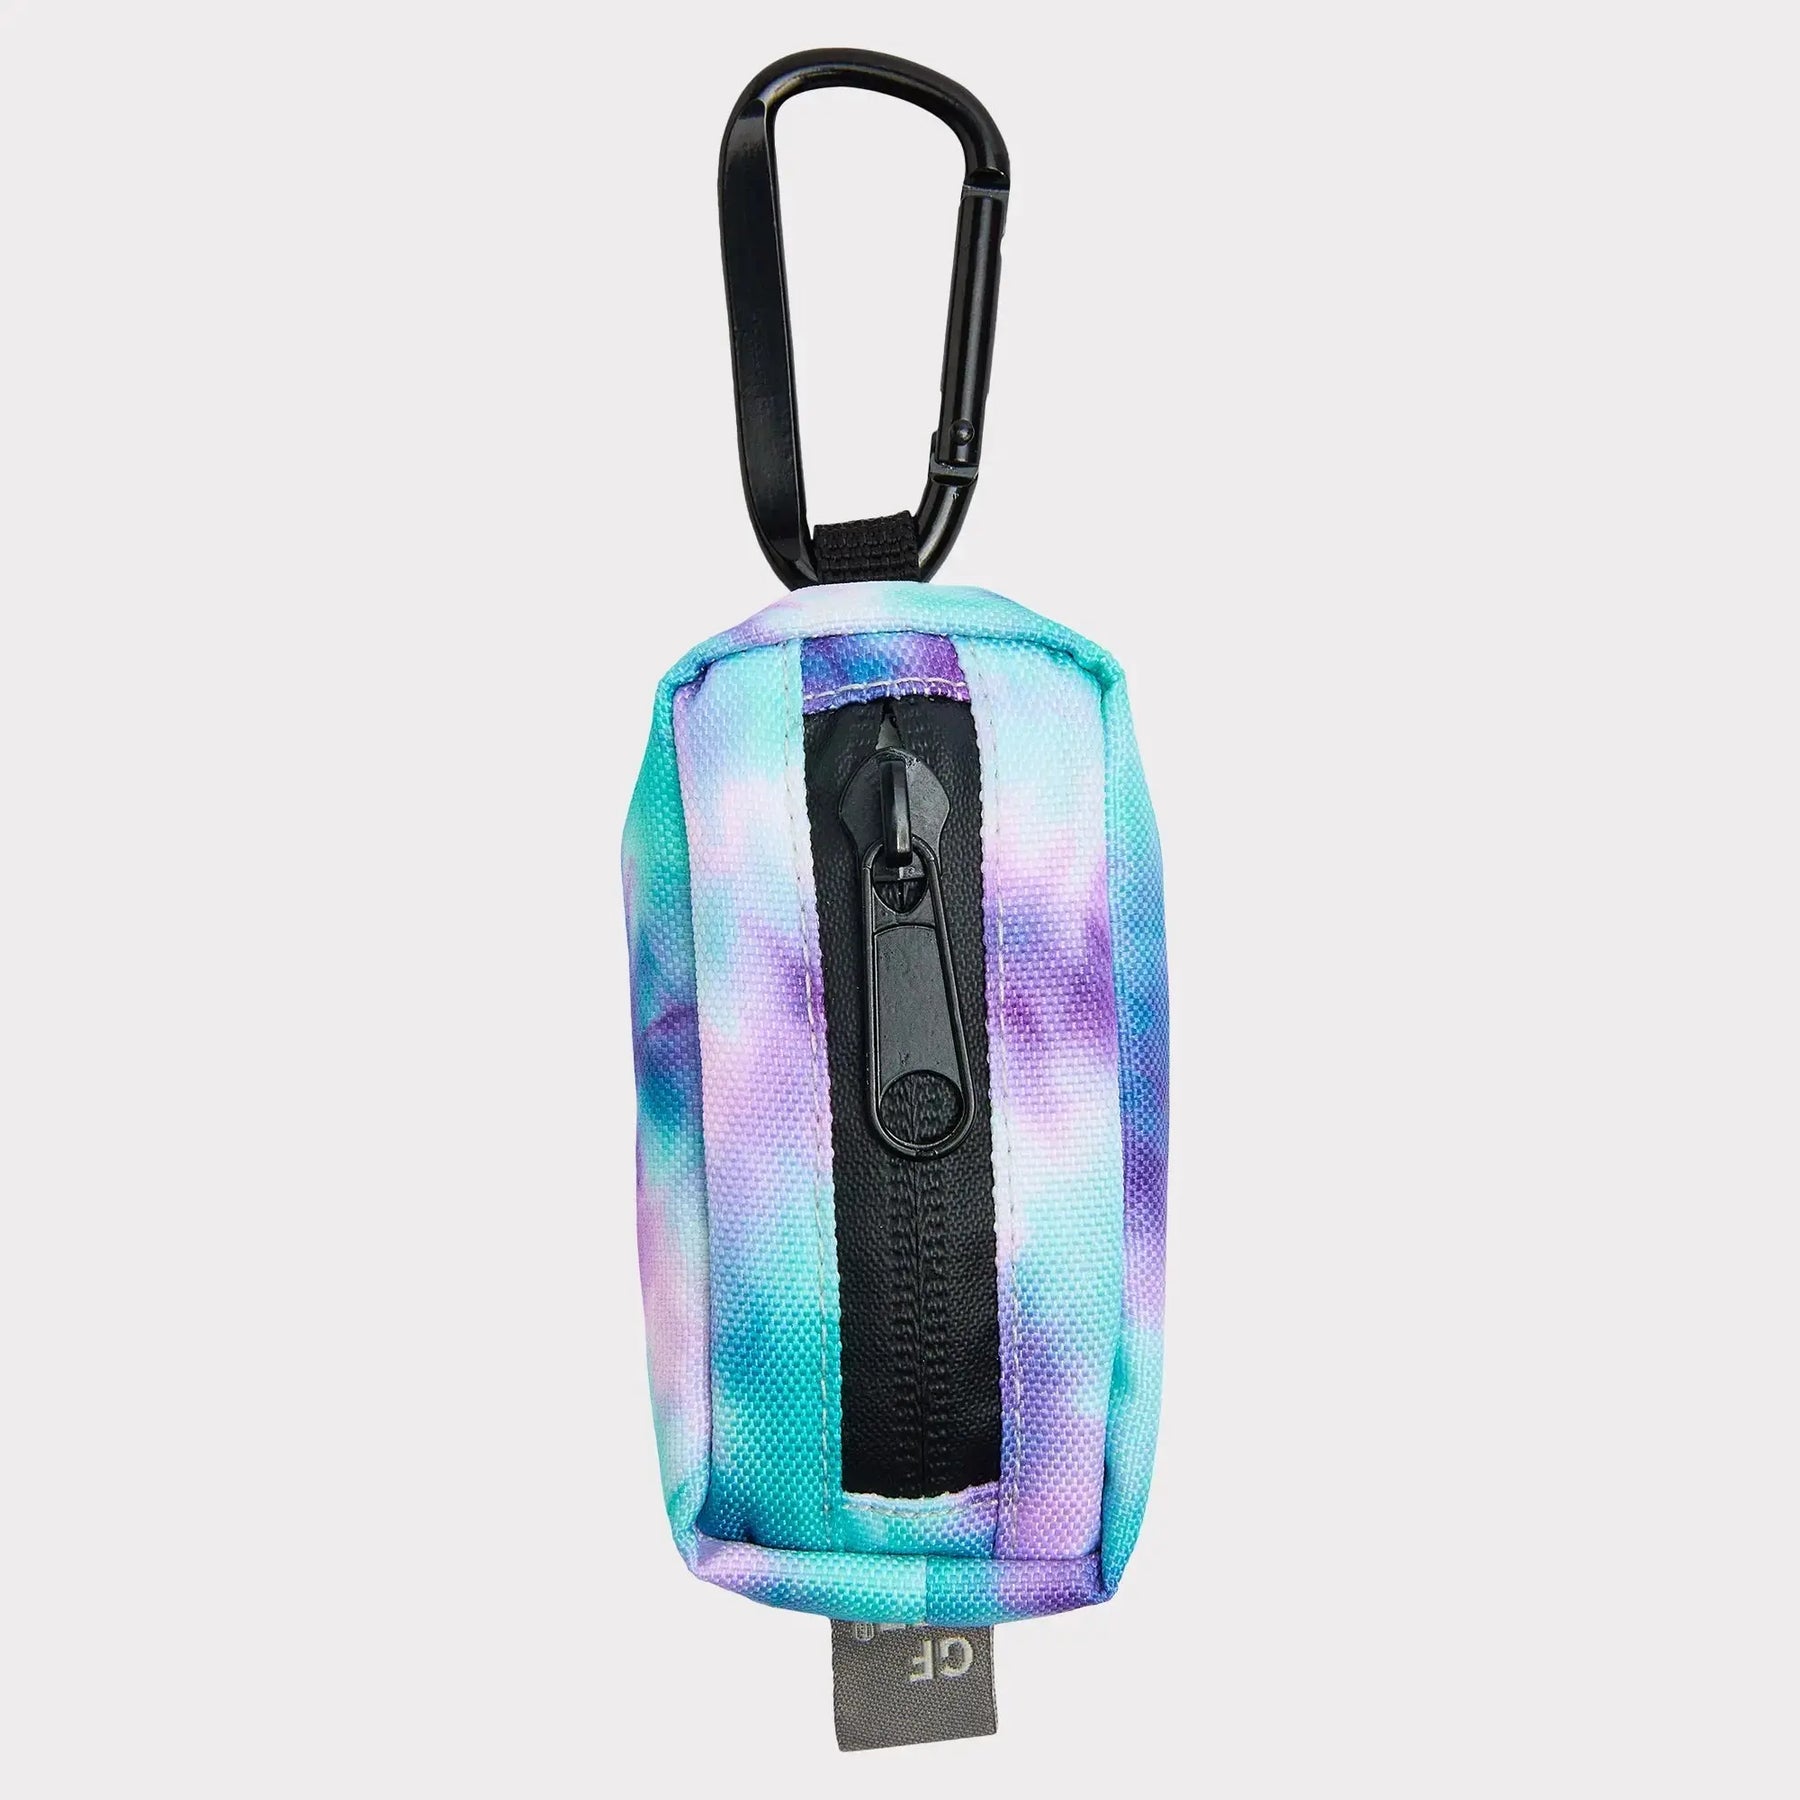 Poop Bag Dispenser | Tie-Dye GF PET singleton_gift GF Pet Official Online Store